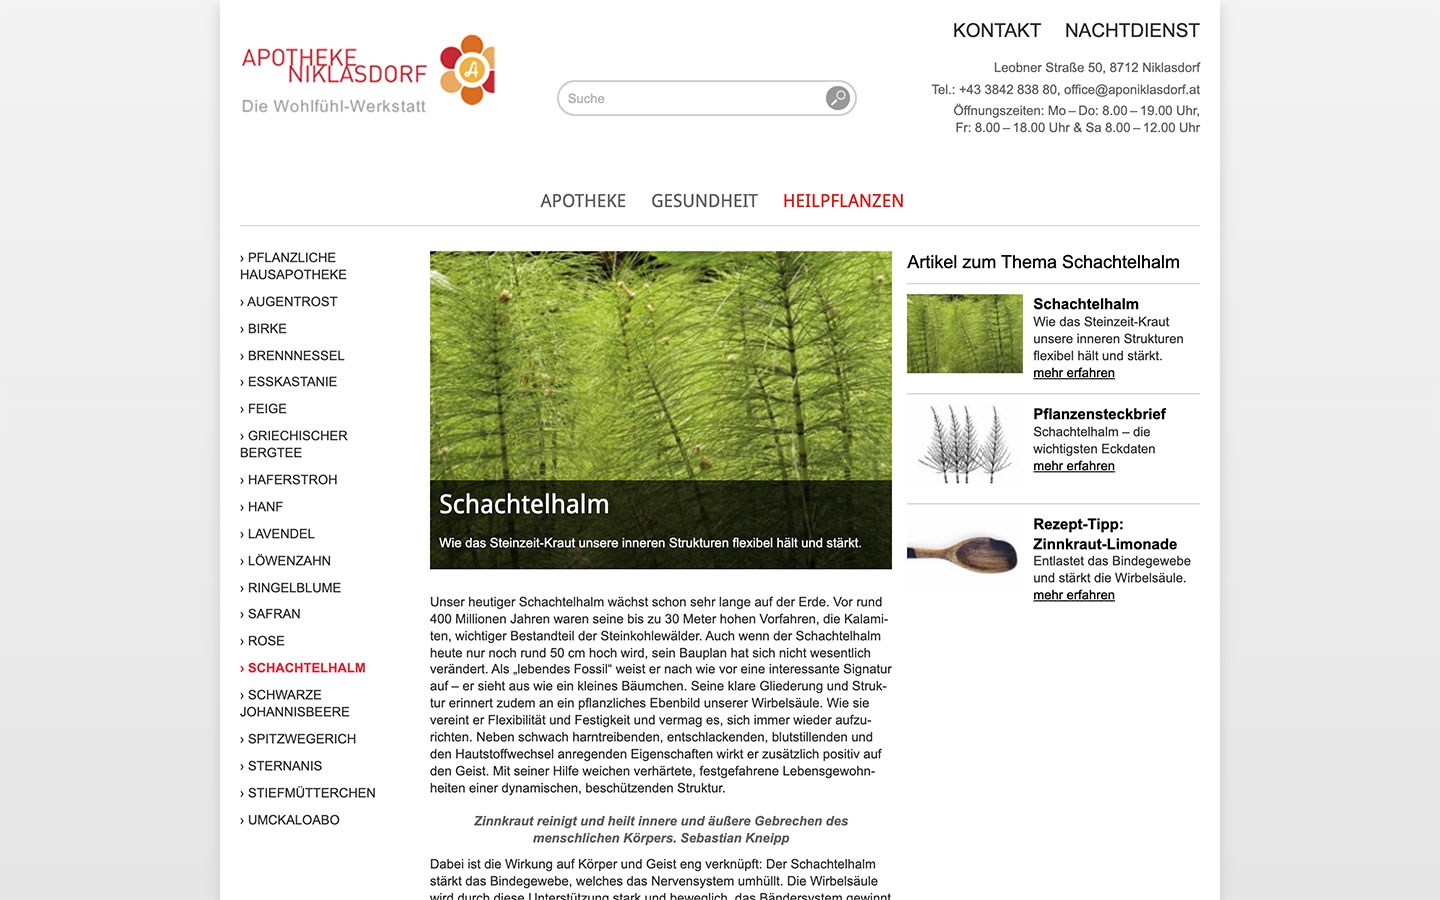 Apotheke Niklasdorf | aponiklasdorf.at | 2013 (Screen Only 05) © echonet communication / Auftraggeber